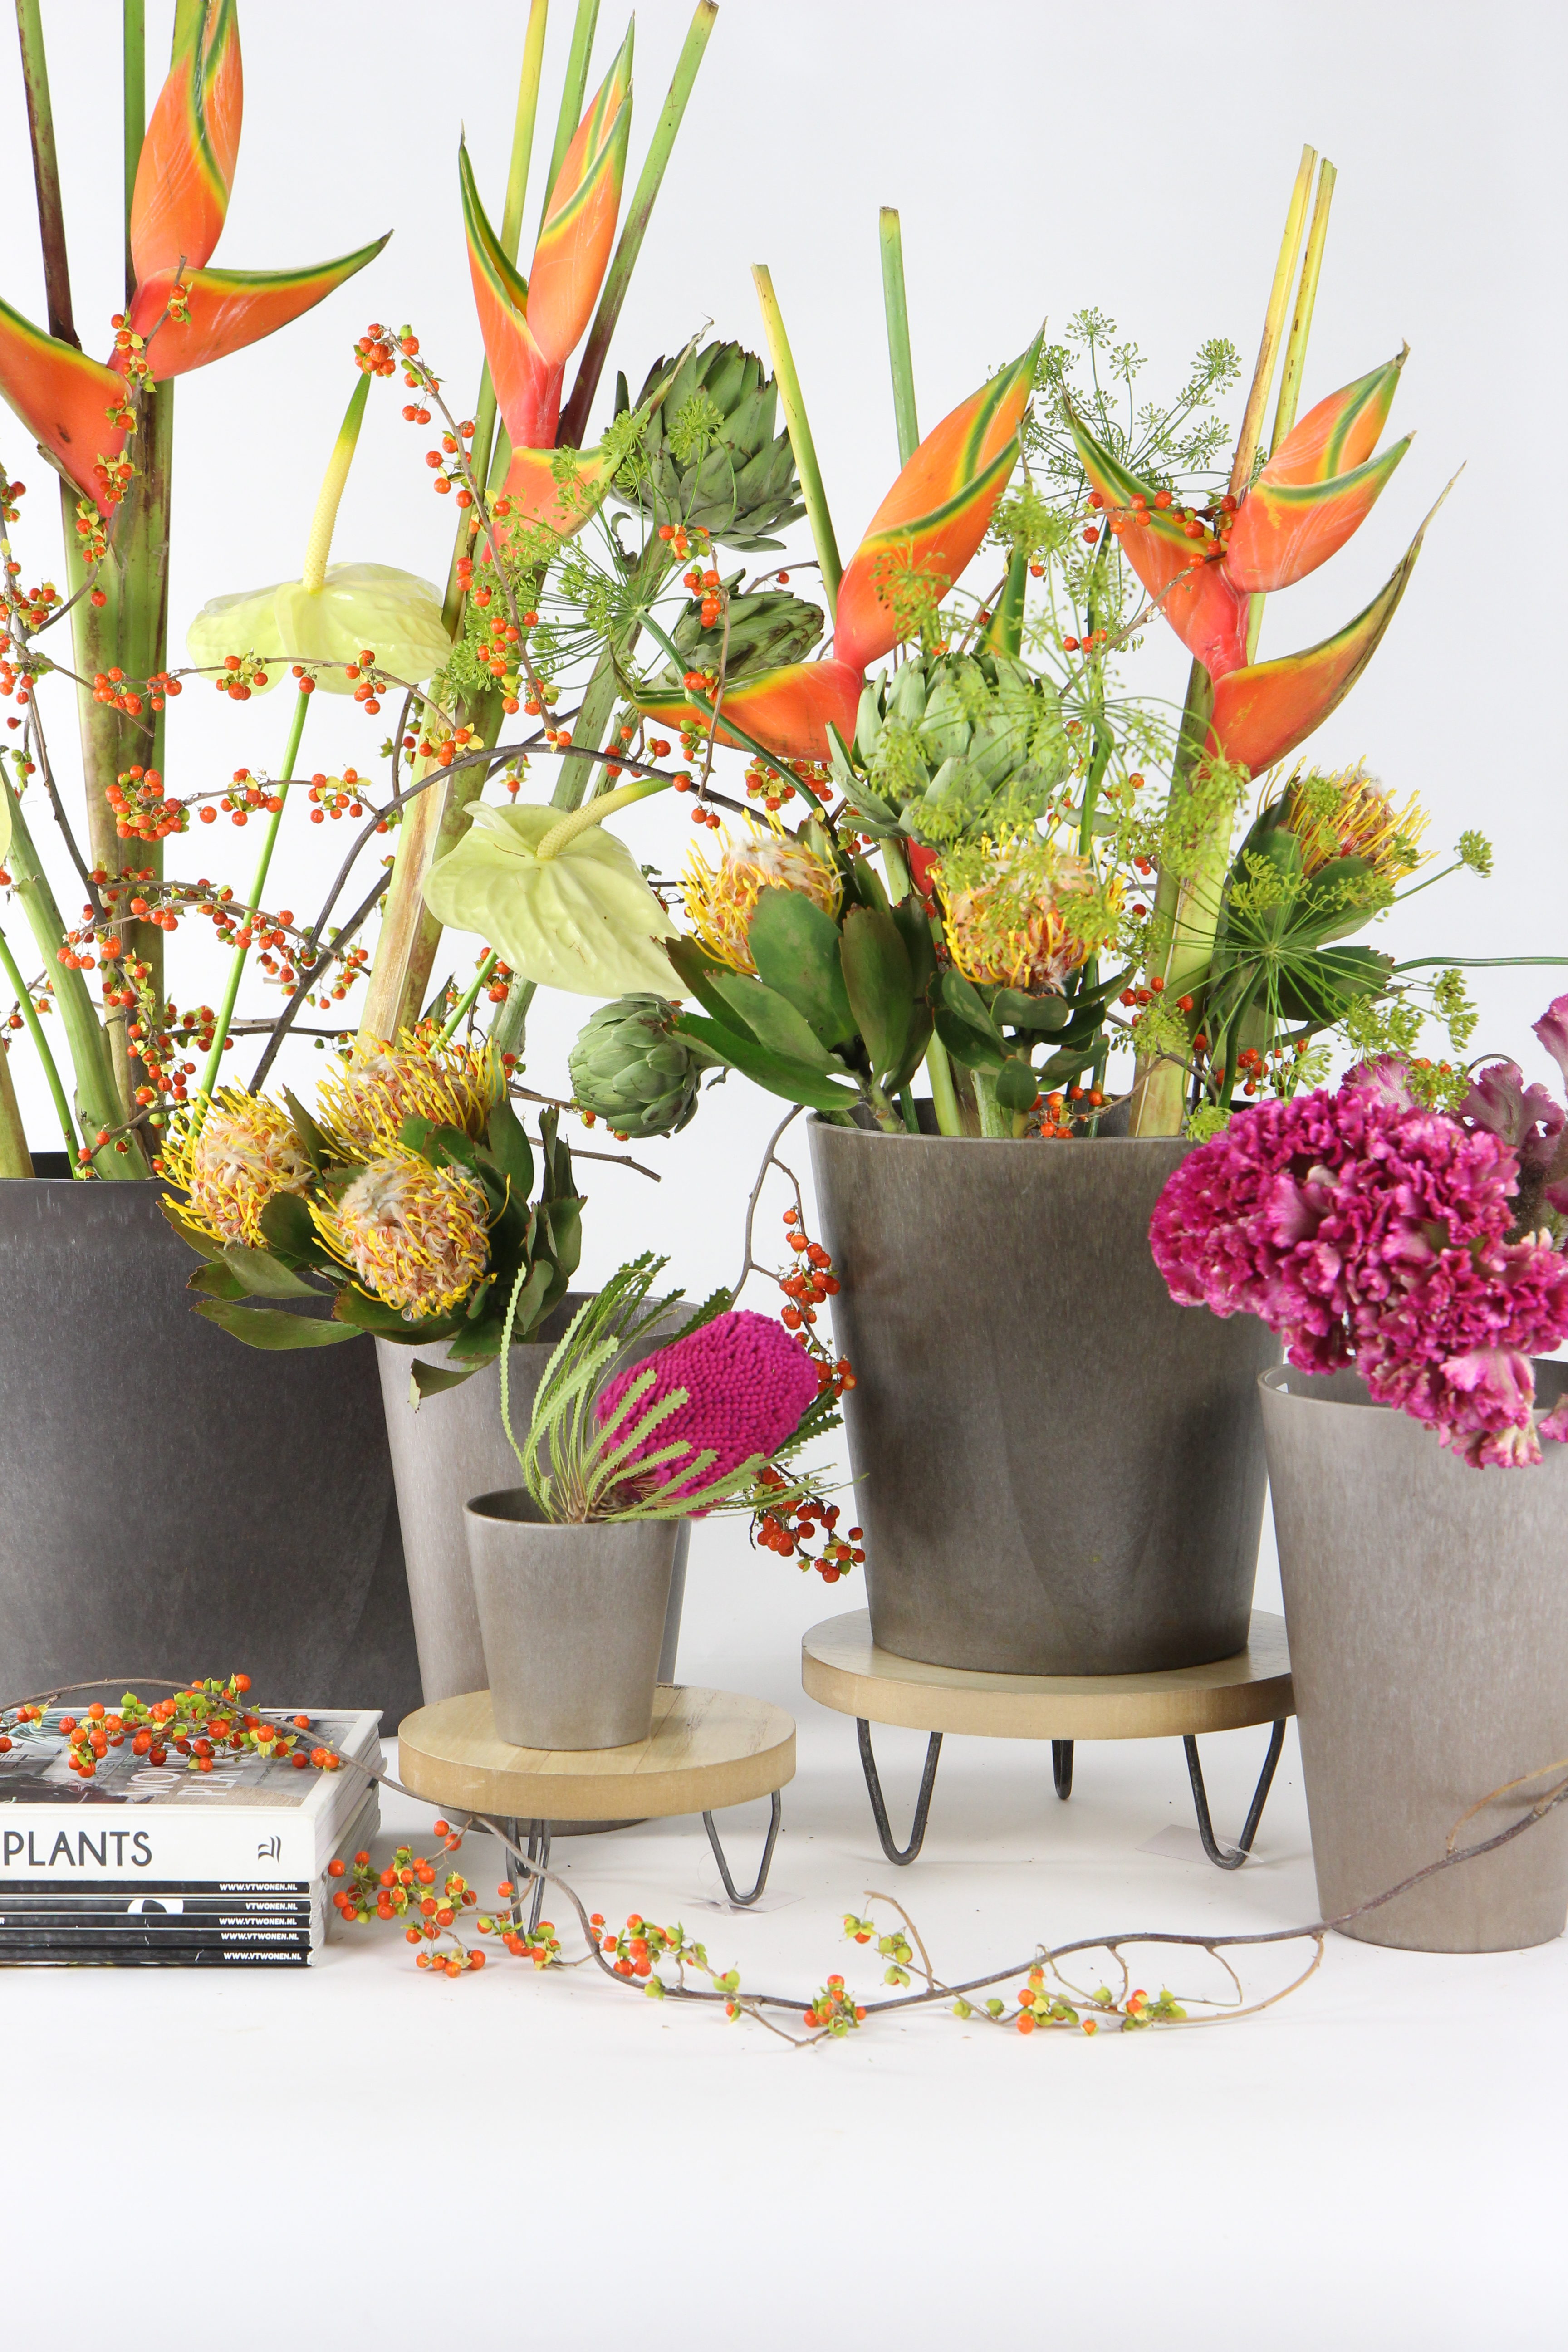 create your own centerpiece - artstone planter - tips for indoor garden - interior inspiration